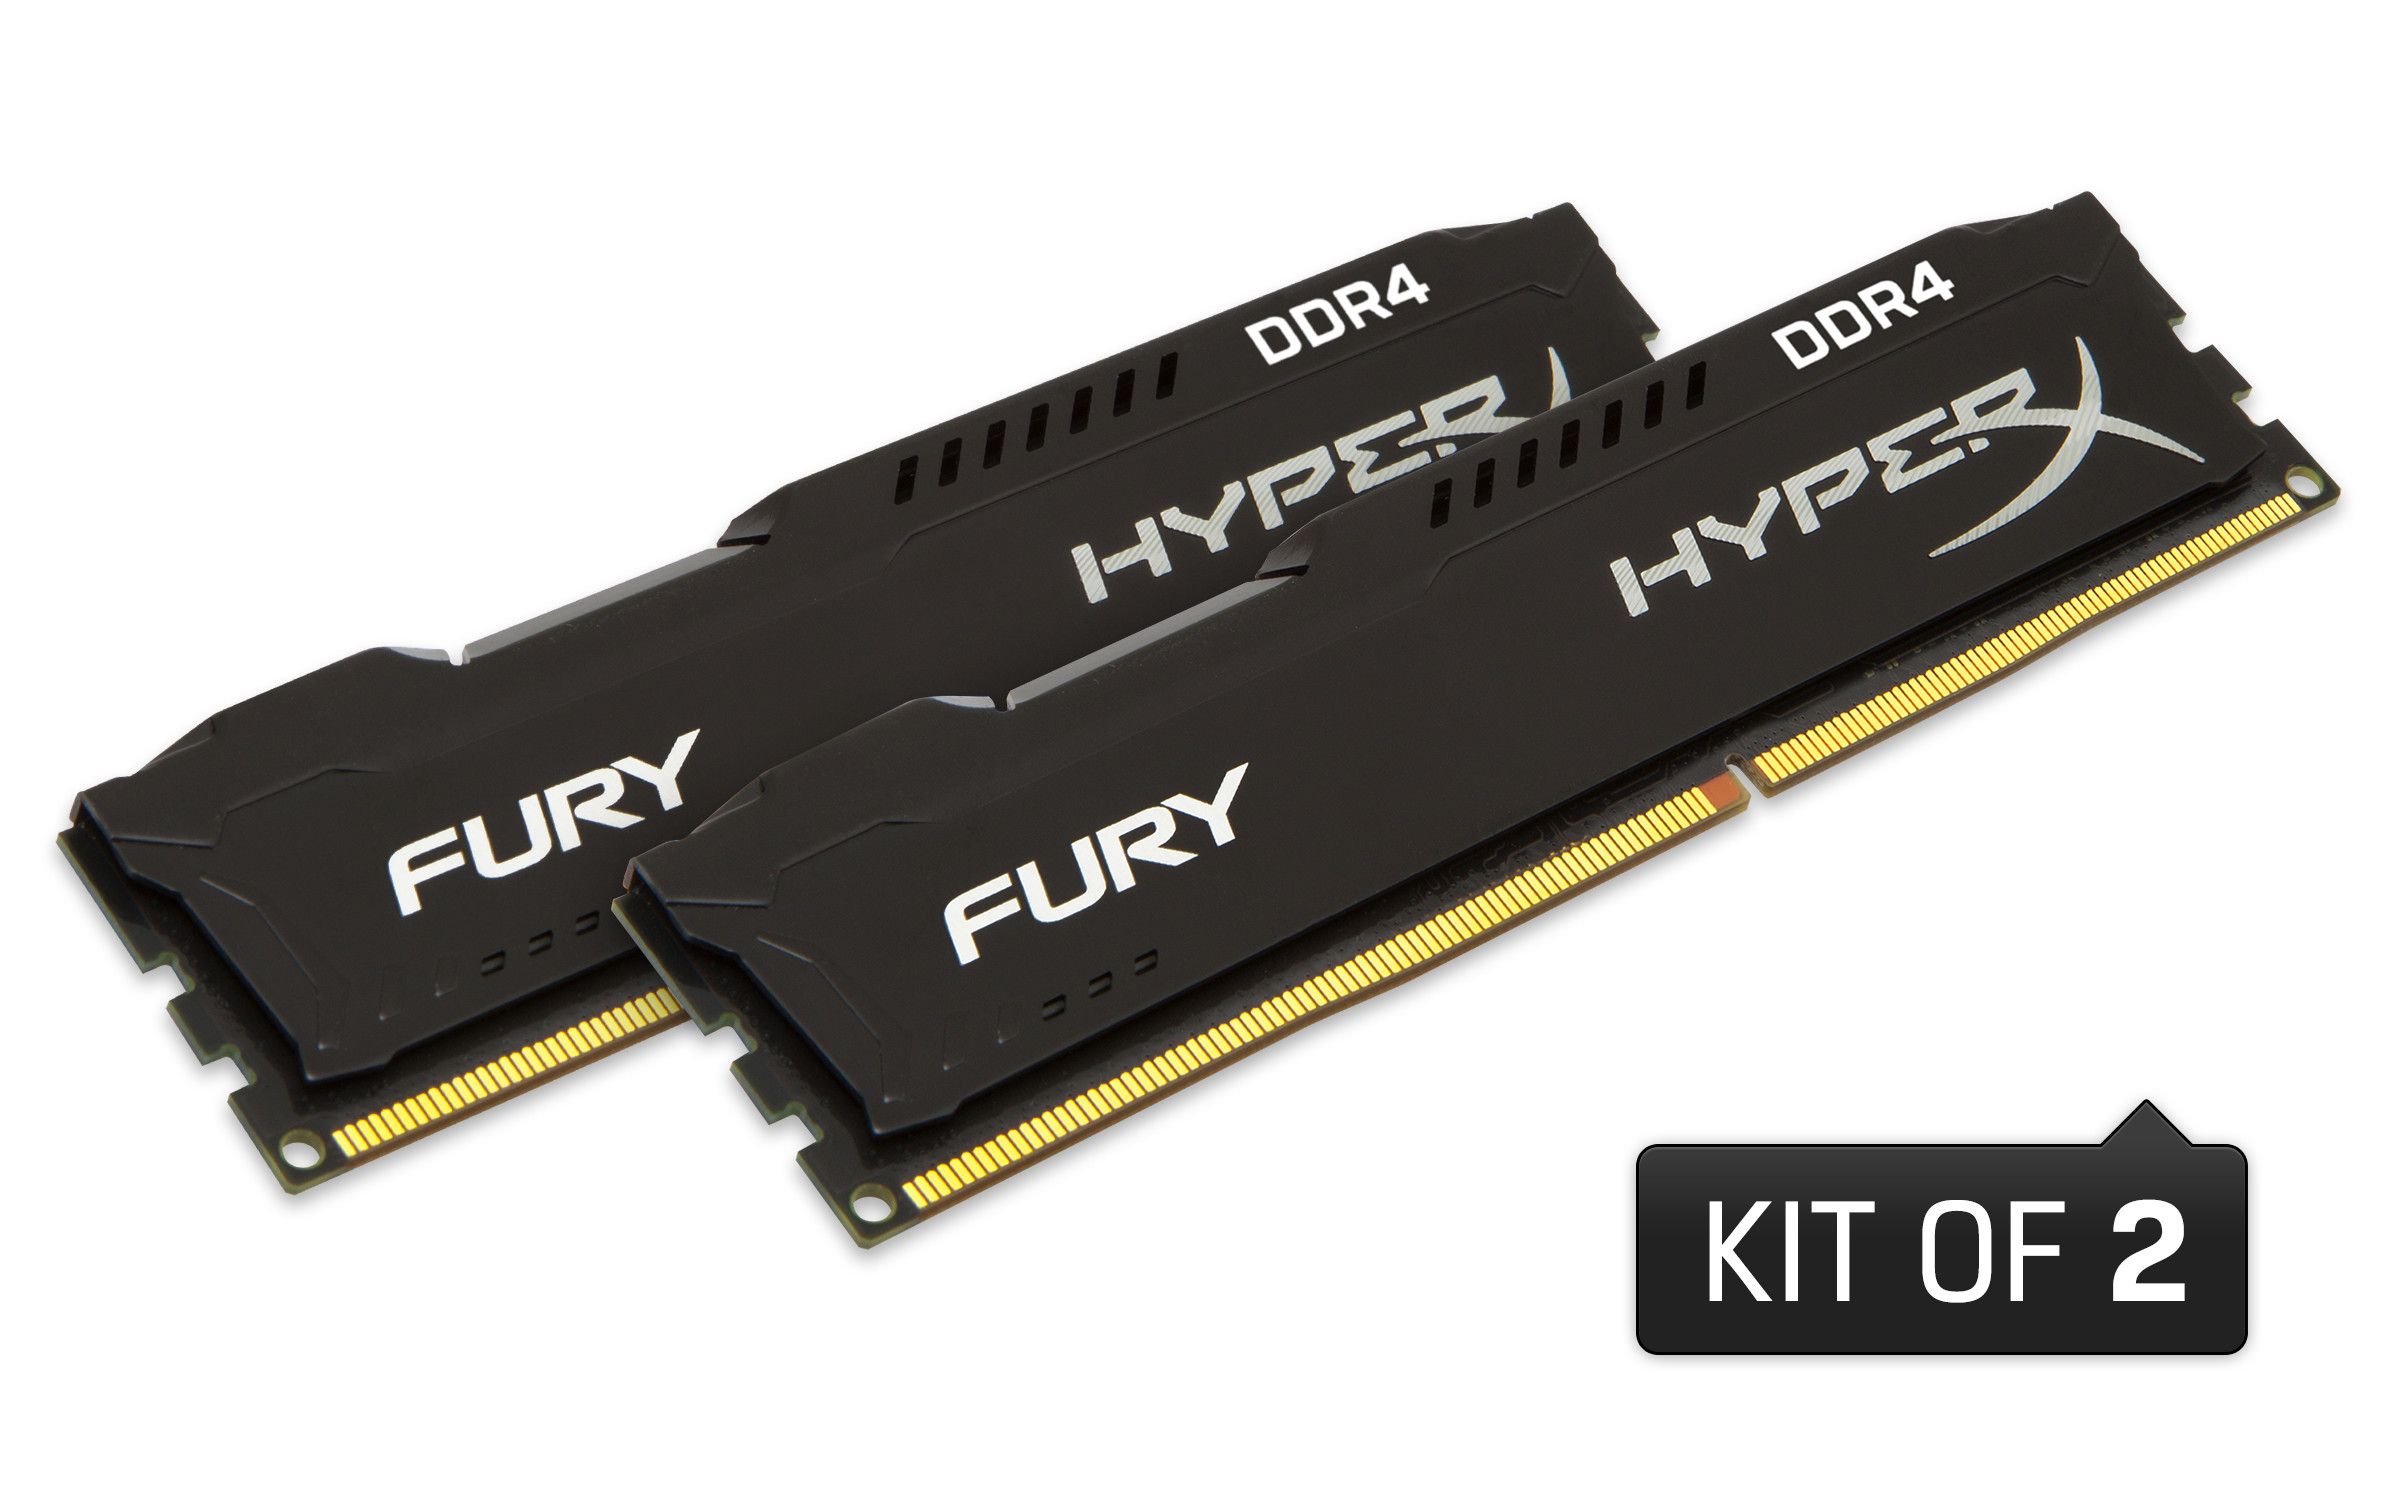 HyperX FURY DDR4 kit of 2